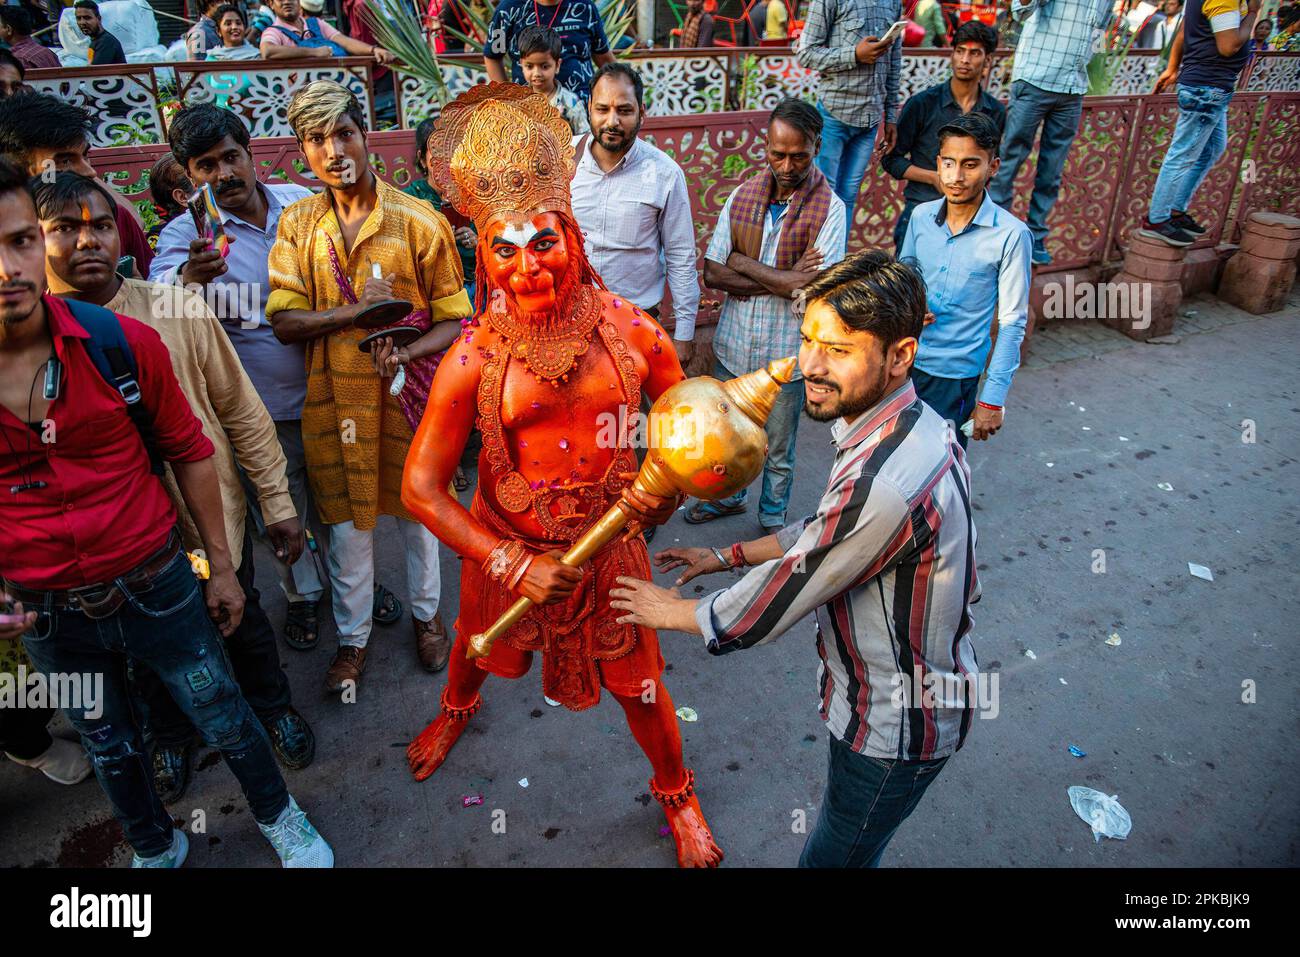 An Indian Hindu devotee dressed as the Monkey God, Hanuman during a procession for the Hindu festival Hanuman Jayanti. The festival commemorates the birth of the Hindu deity Hanuman. Stock Photo